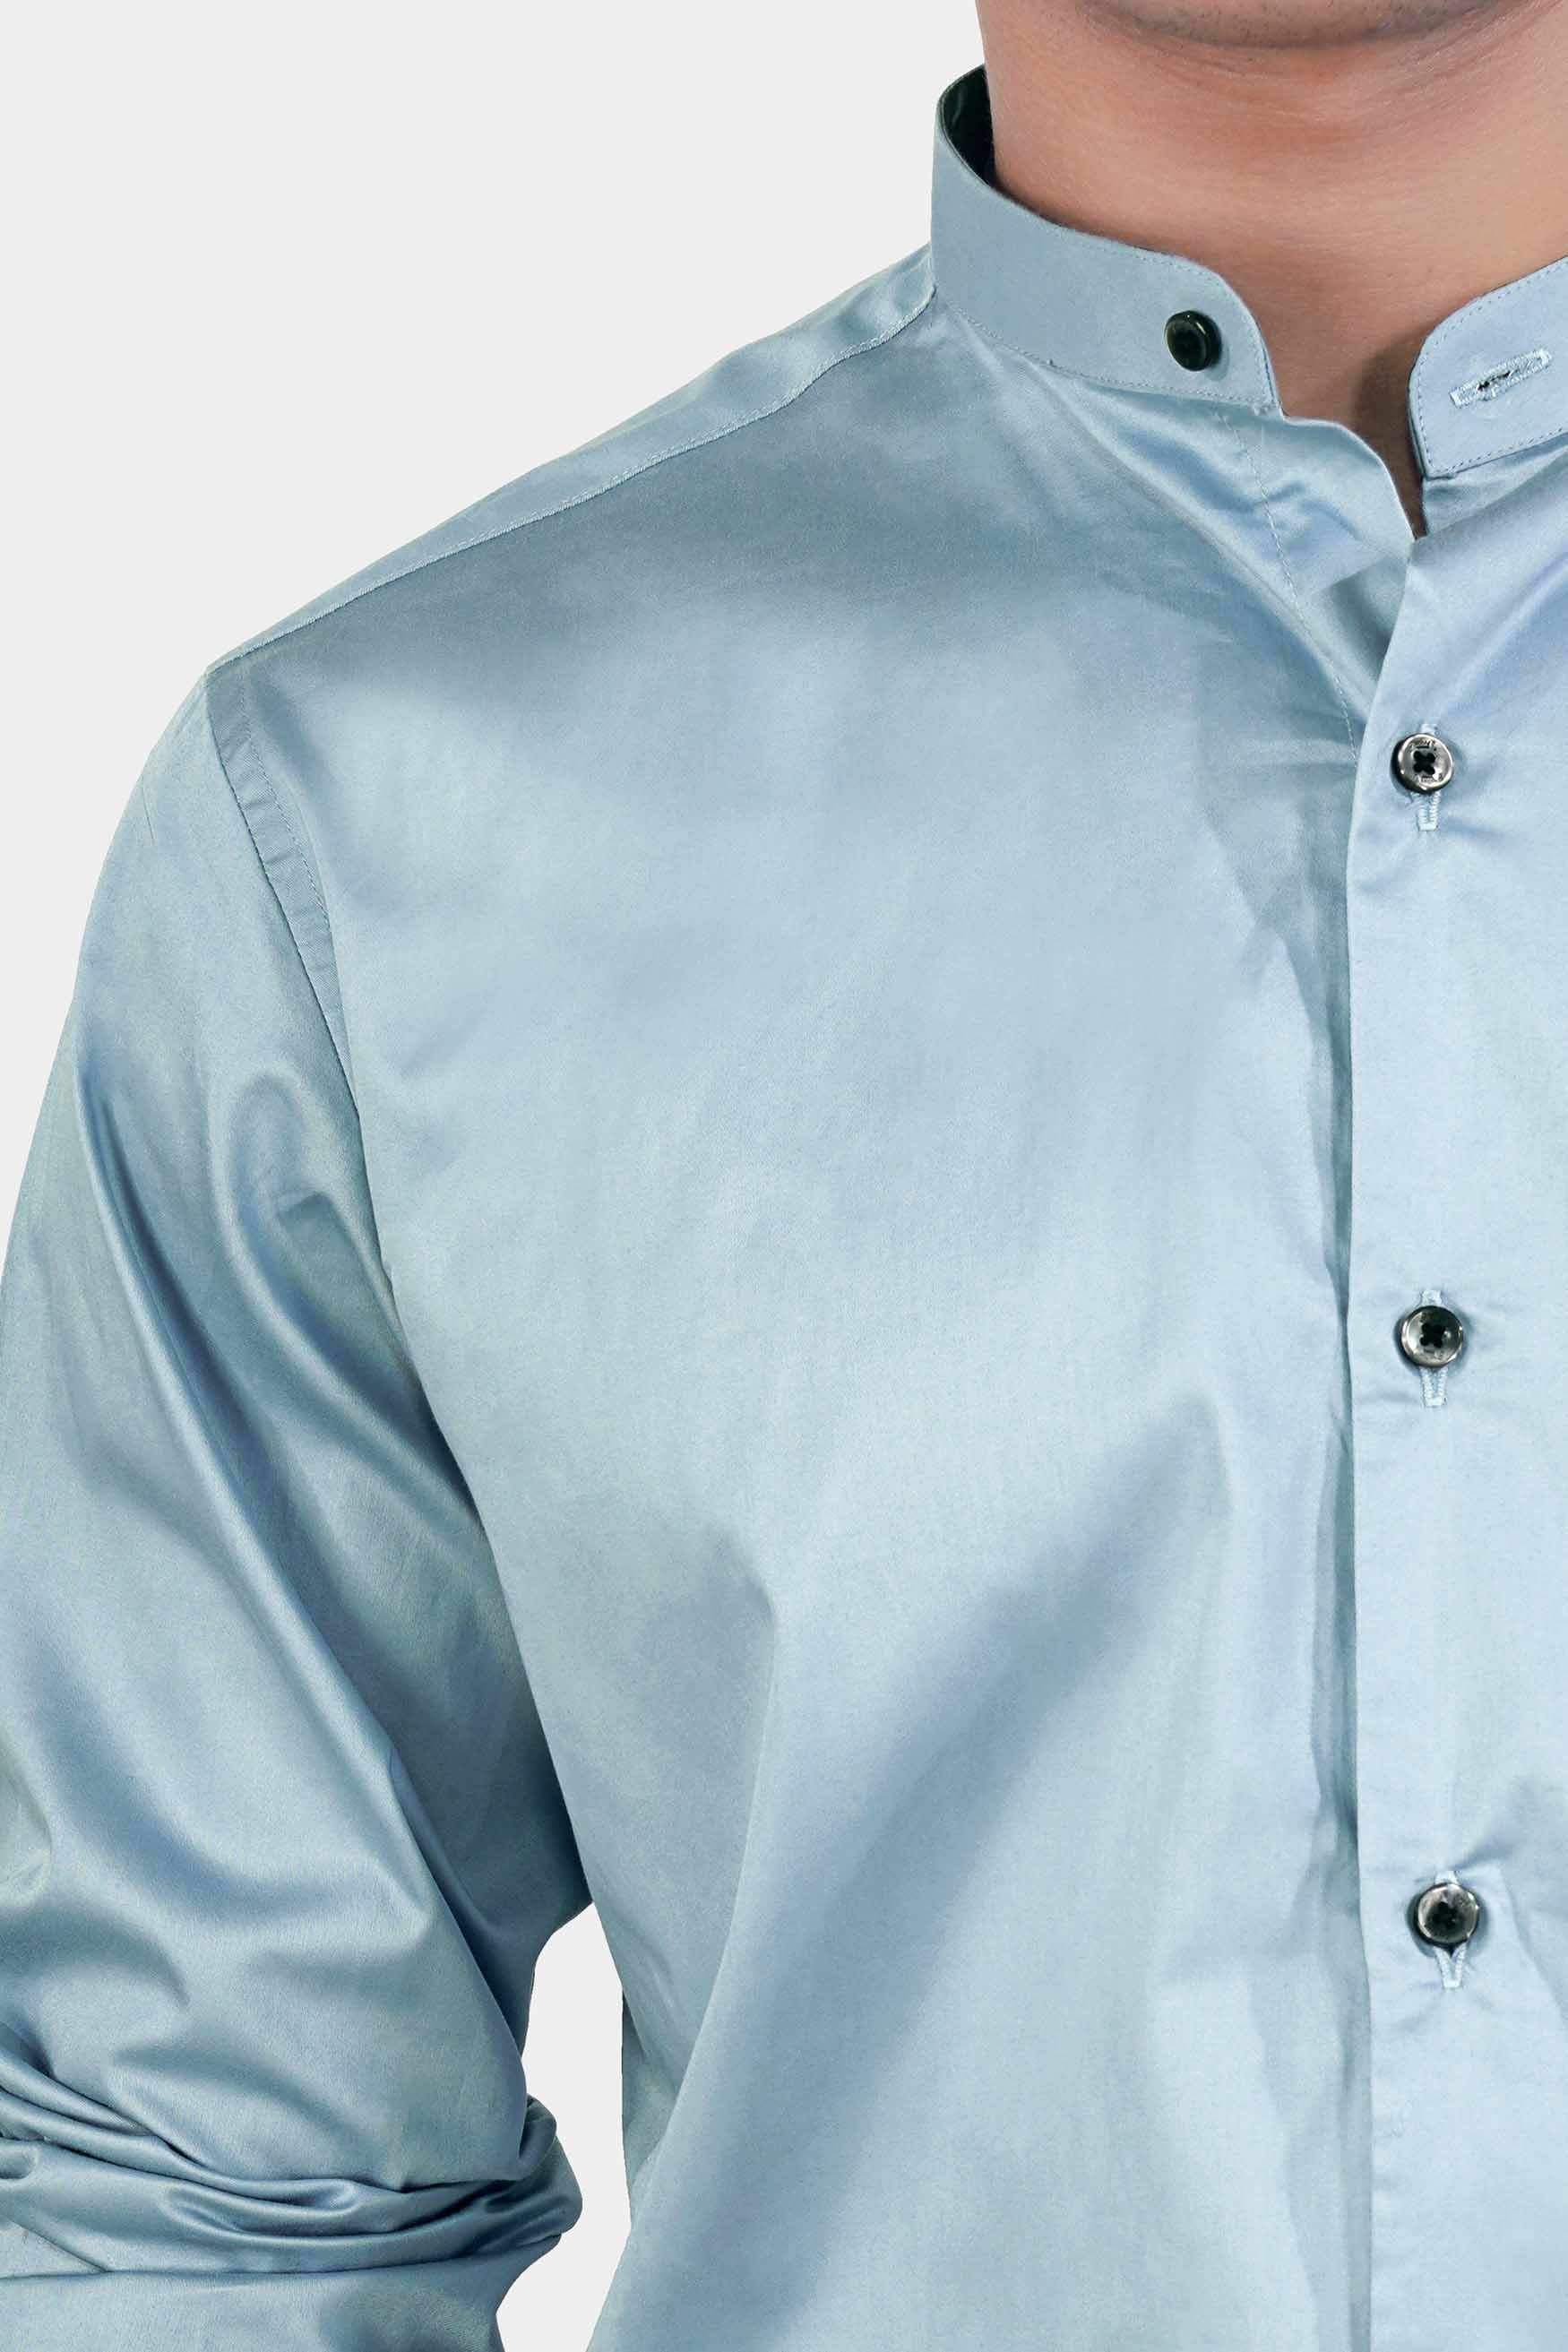 Casper Blue Subtle Sheen Super Soft Premium Cotton Mandarin Shirt